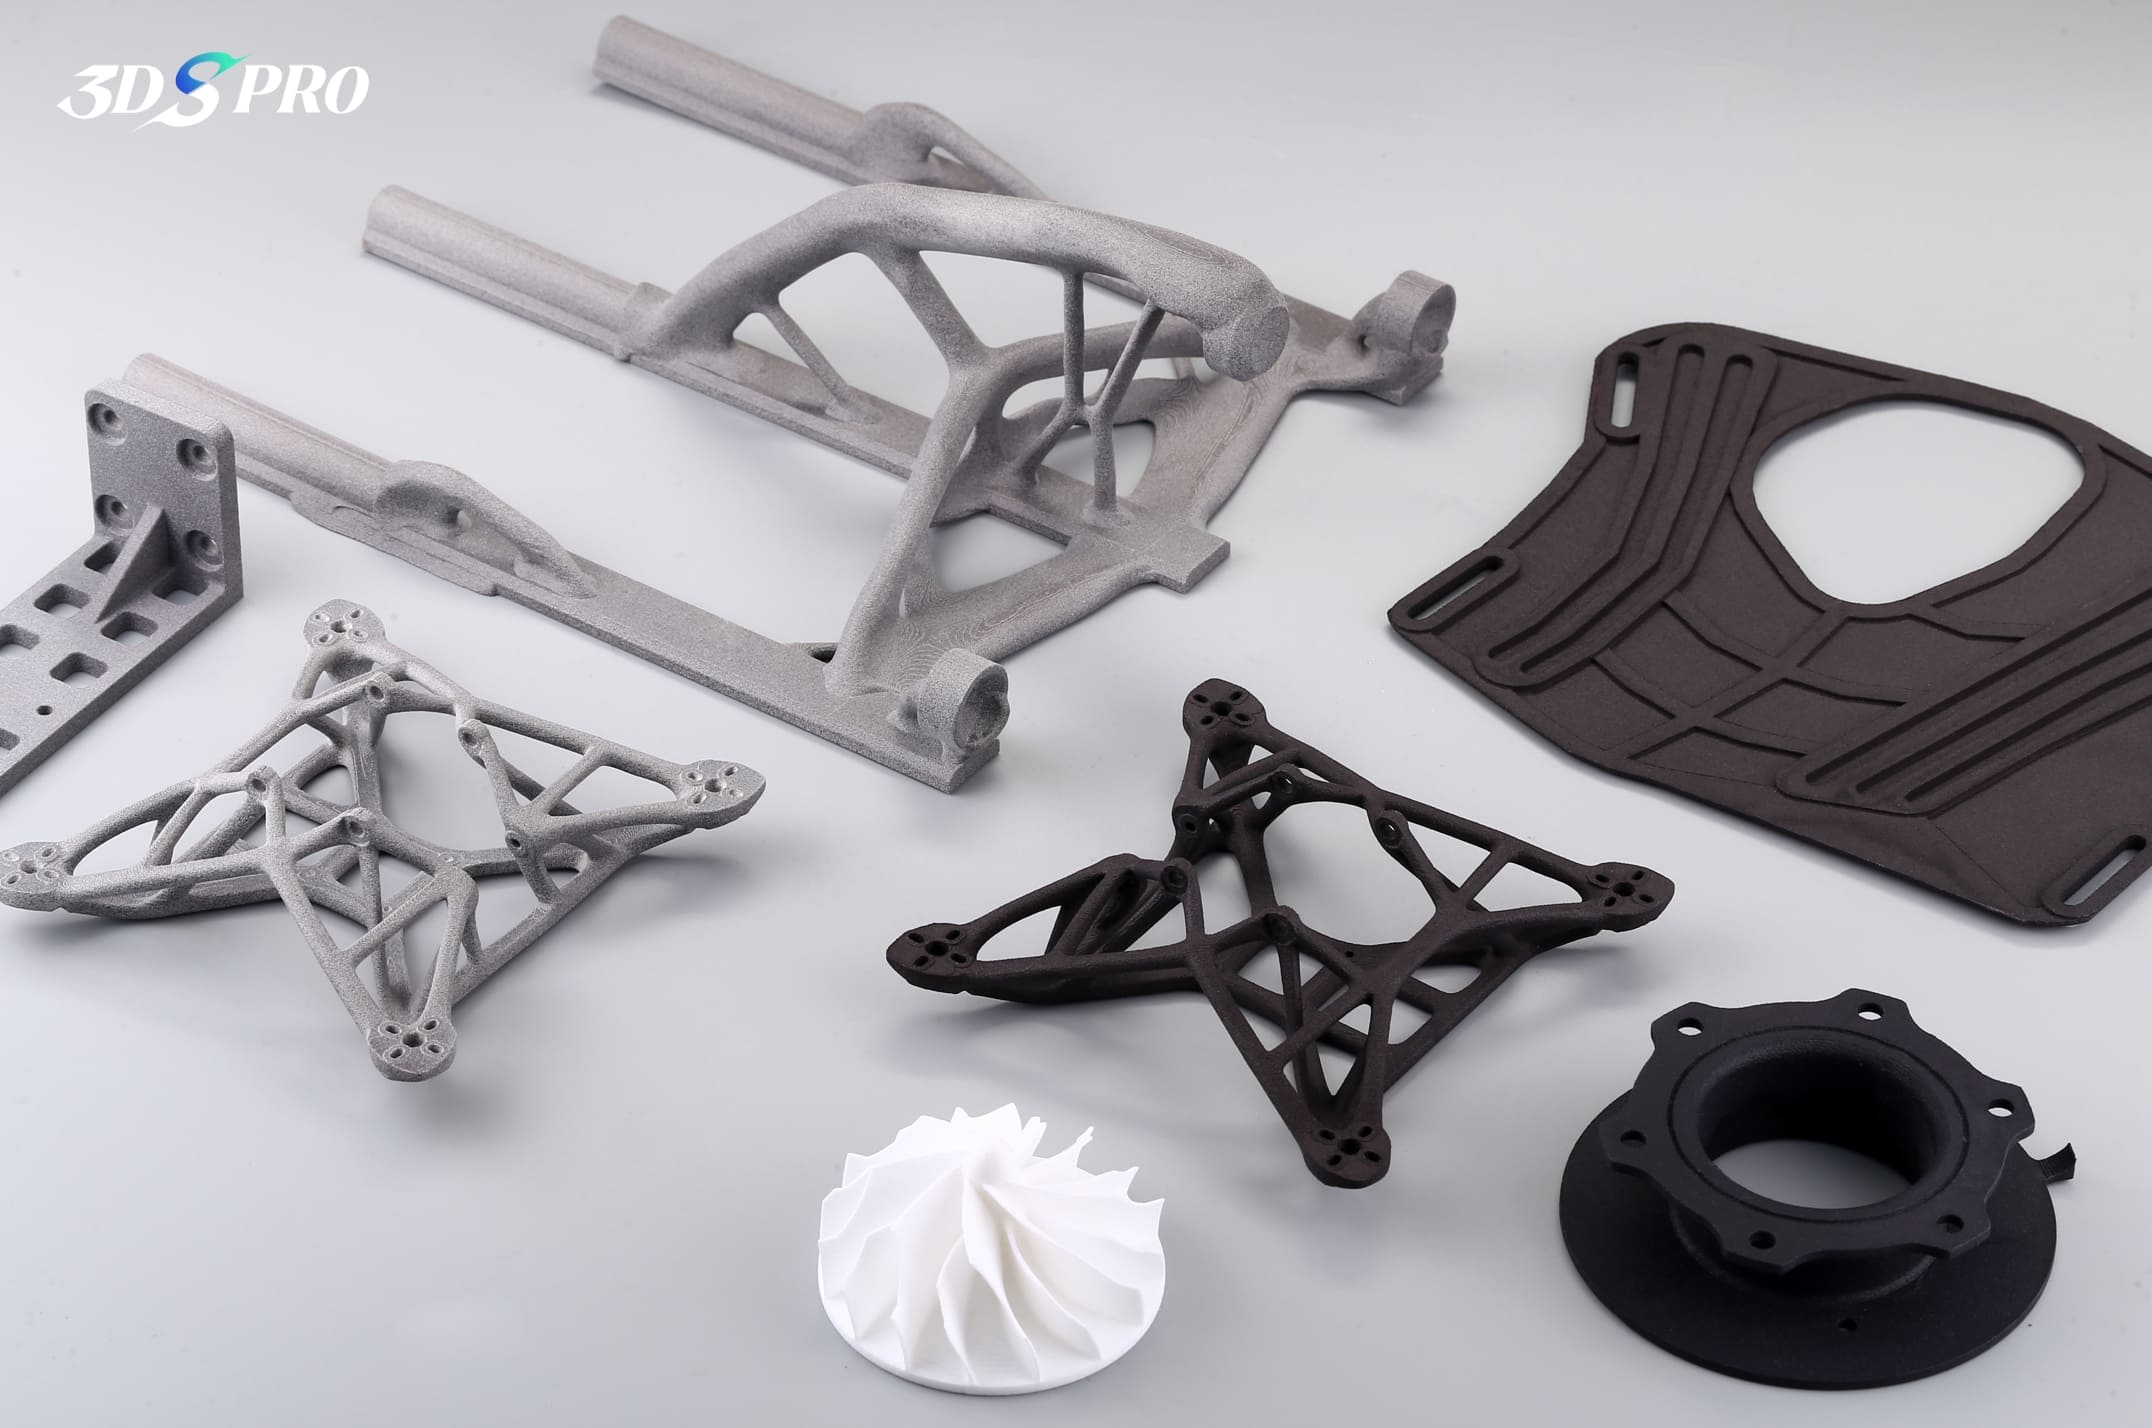 3DSPRO Flexbile 3D Printing Services-SLS & MJF